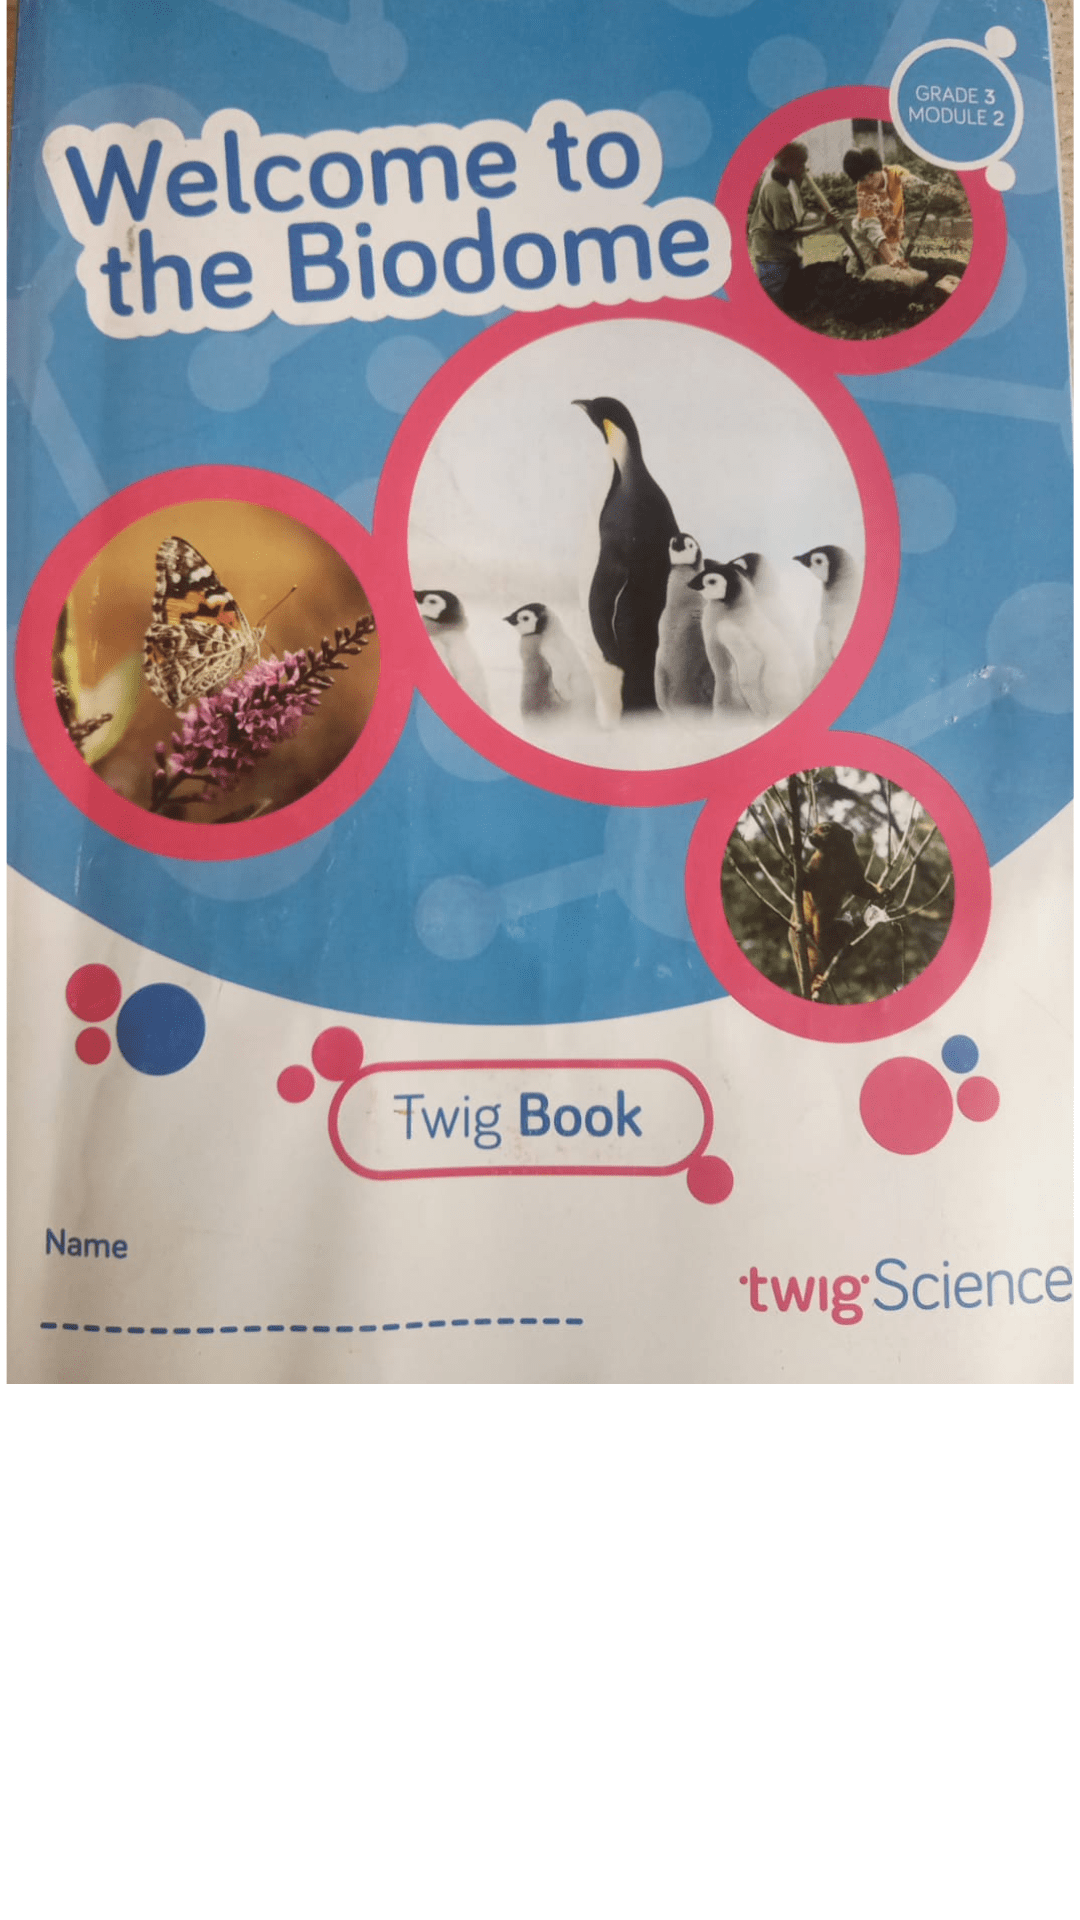 Welcome to the Biodome Twig Book Grade 3 Module 2